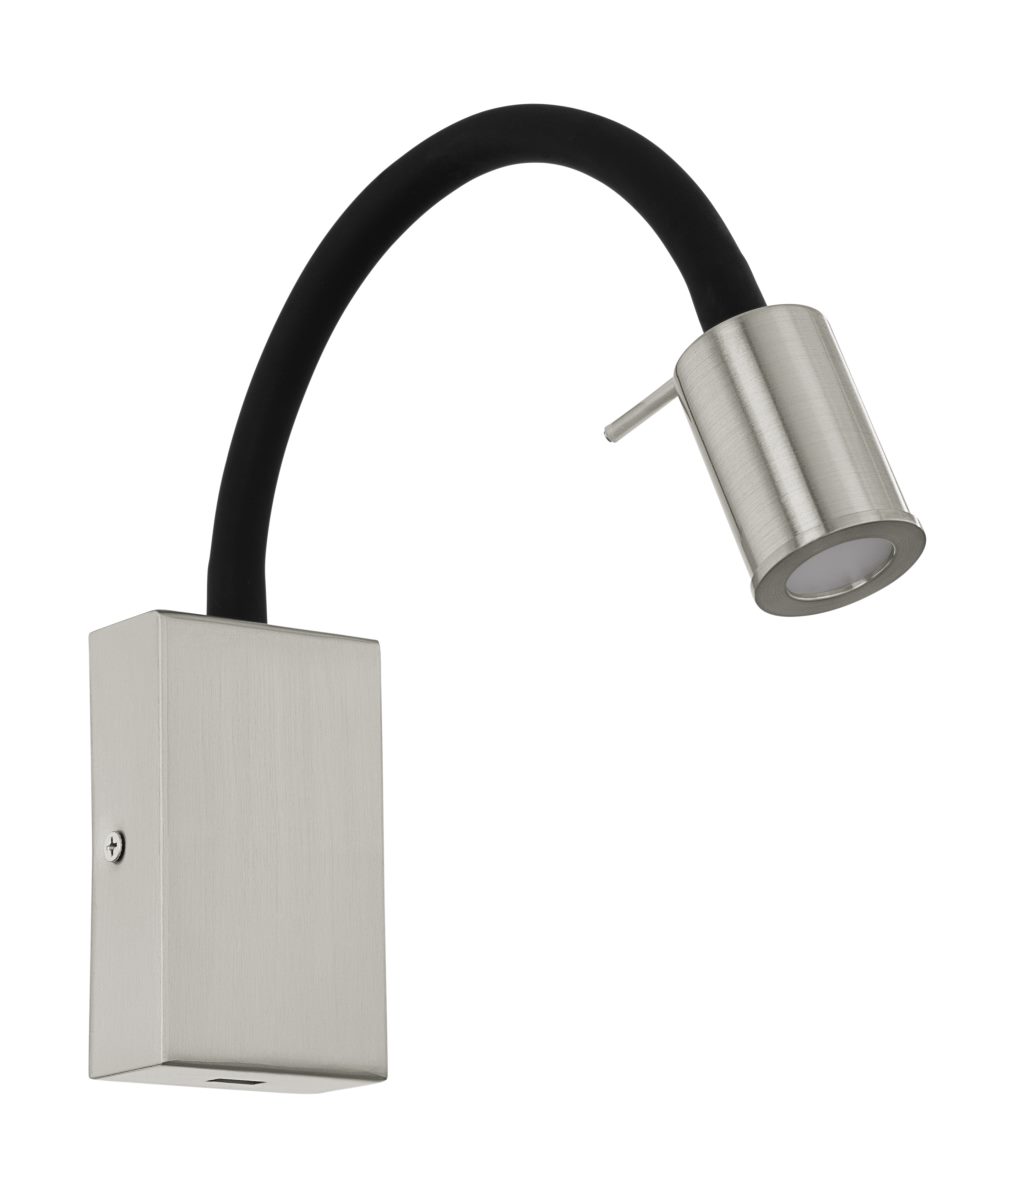 EGLO TAZZOLI LED Wandlampe 380lm nickel-matt mit USB Ladebuchse